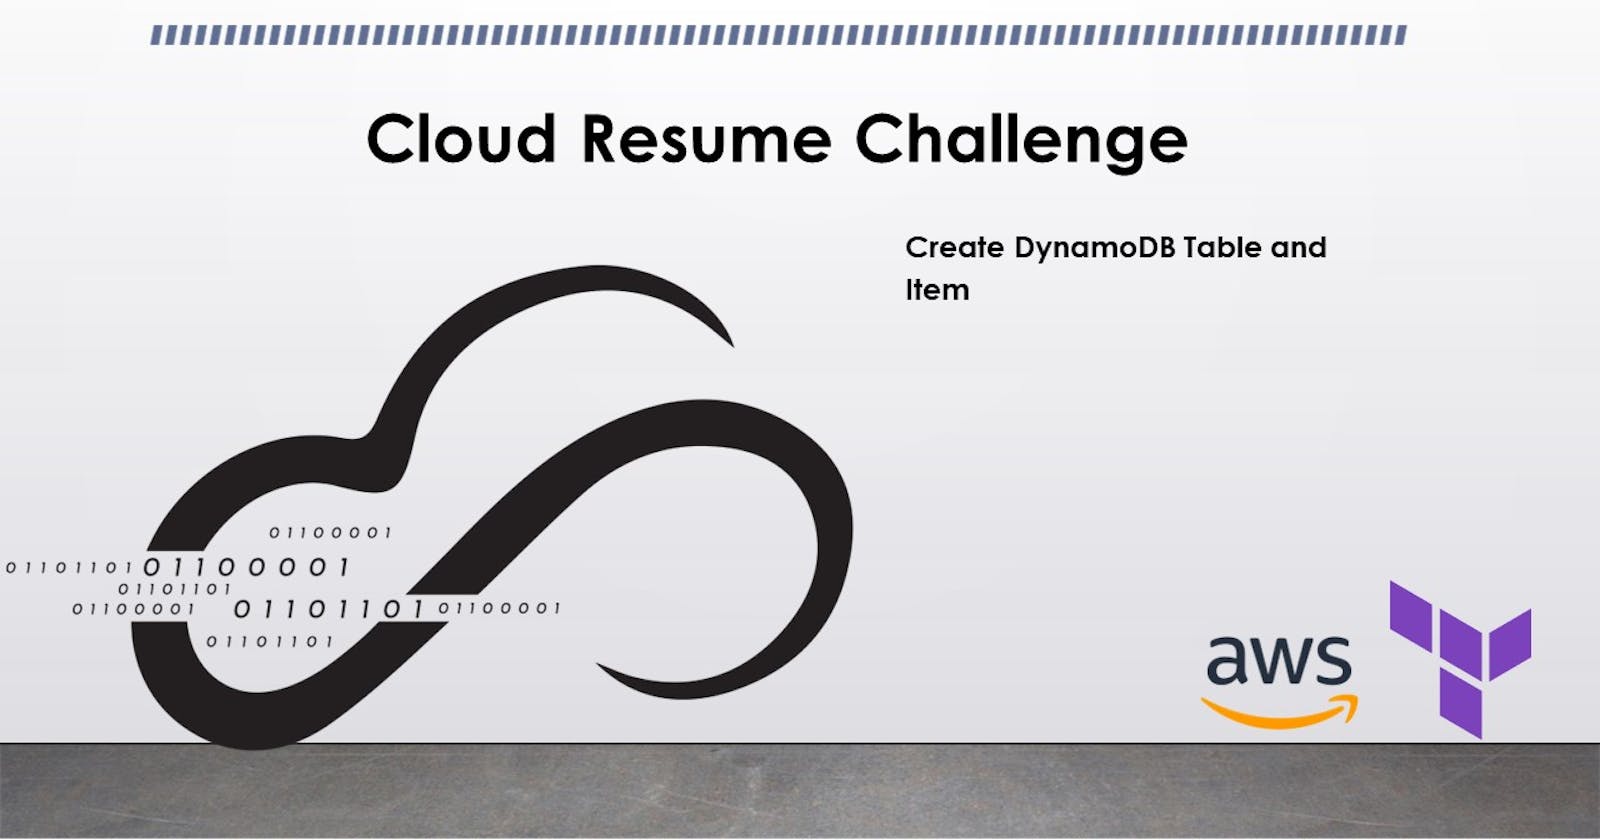 6. Cloud Resume Challenge: Creating DynamoDB Table